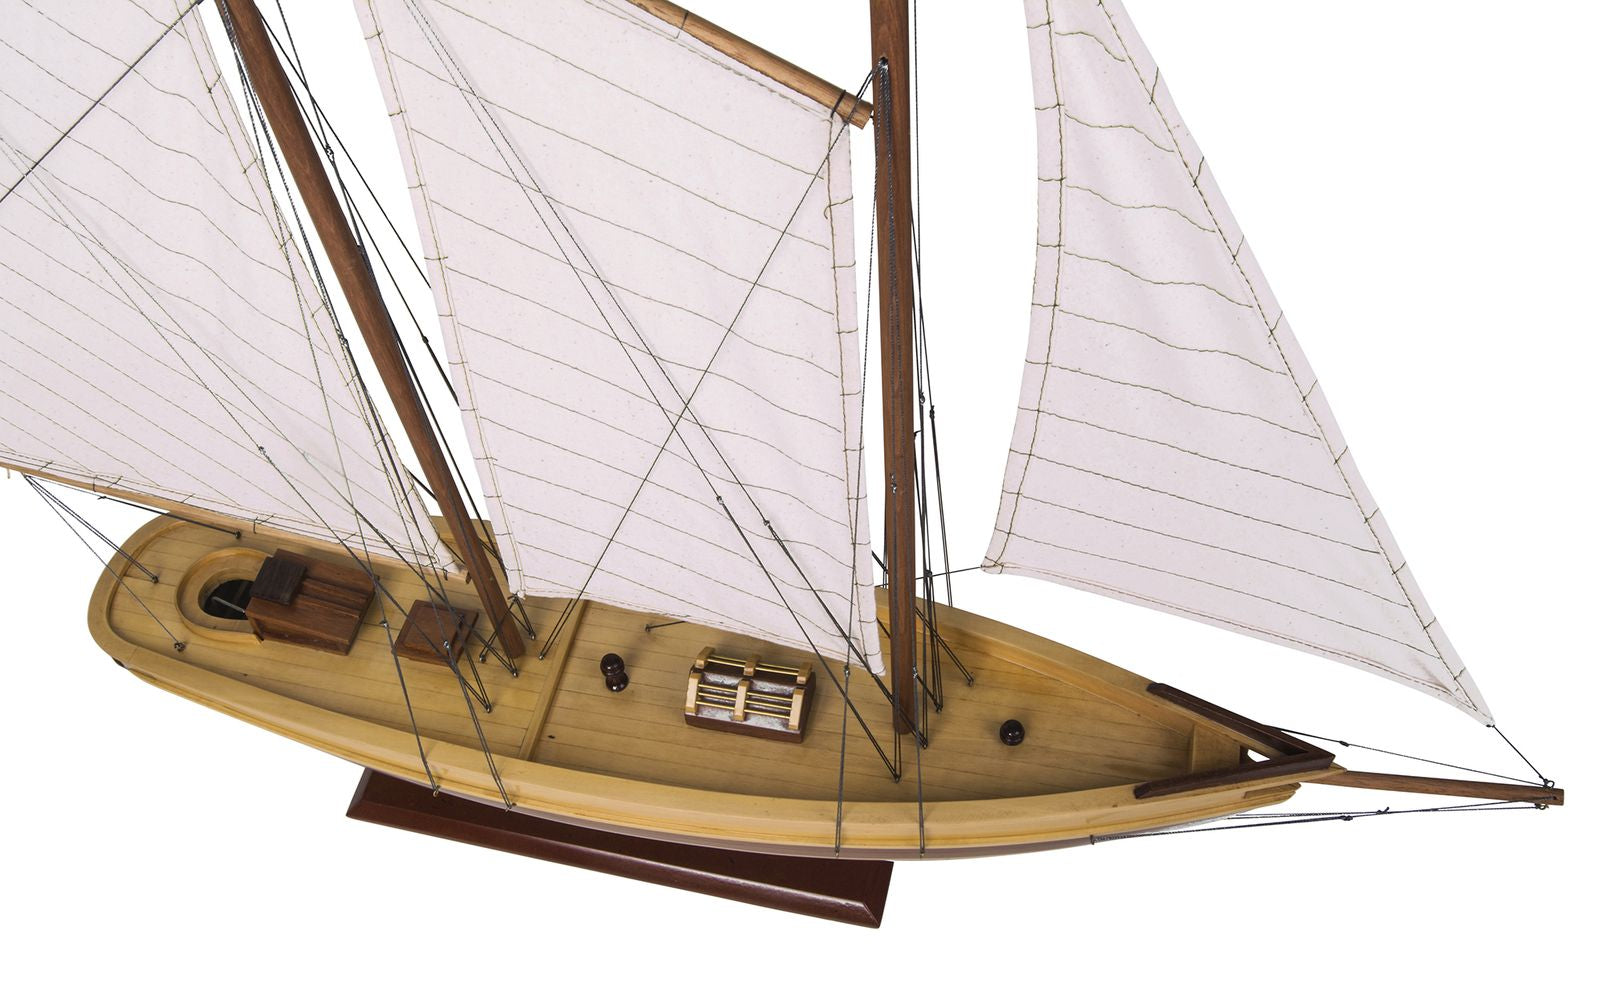 Authentic Models America Segelschiffsmodell, klein